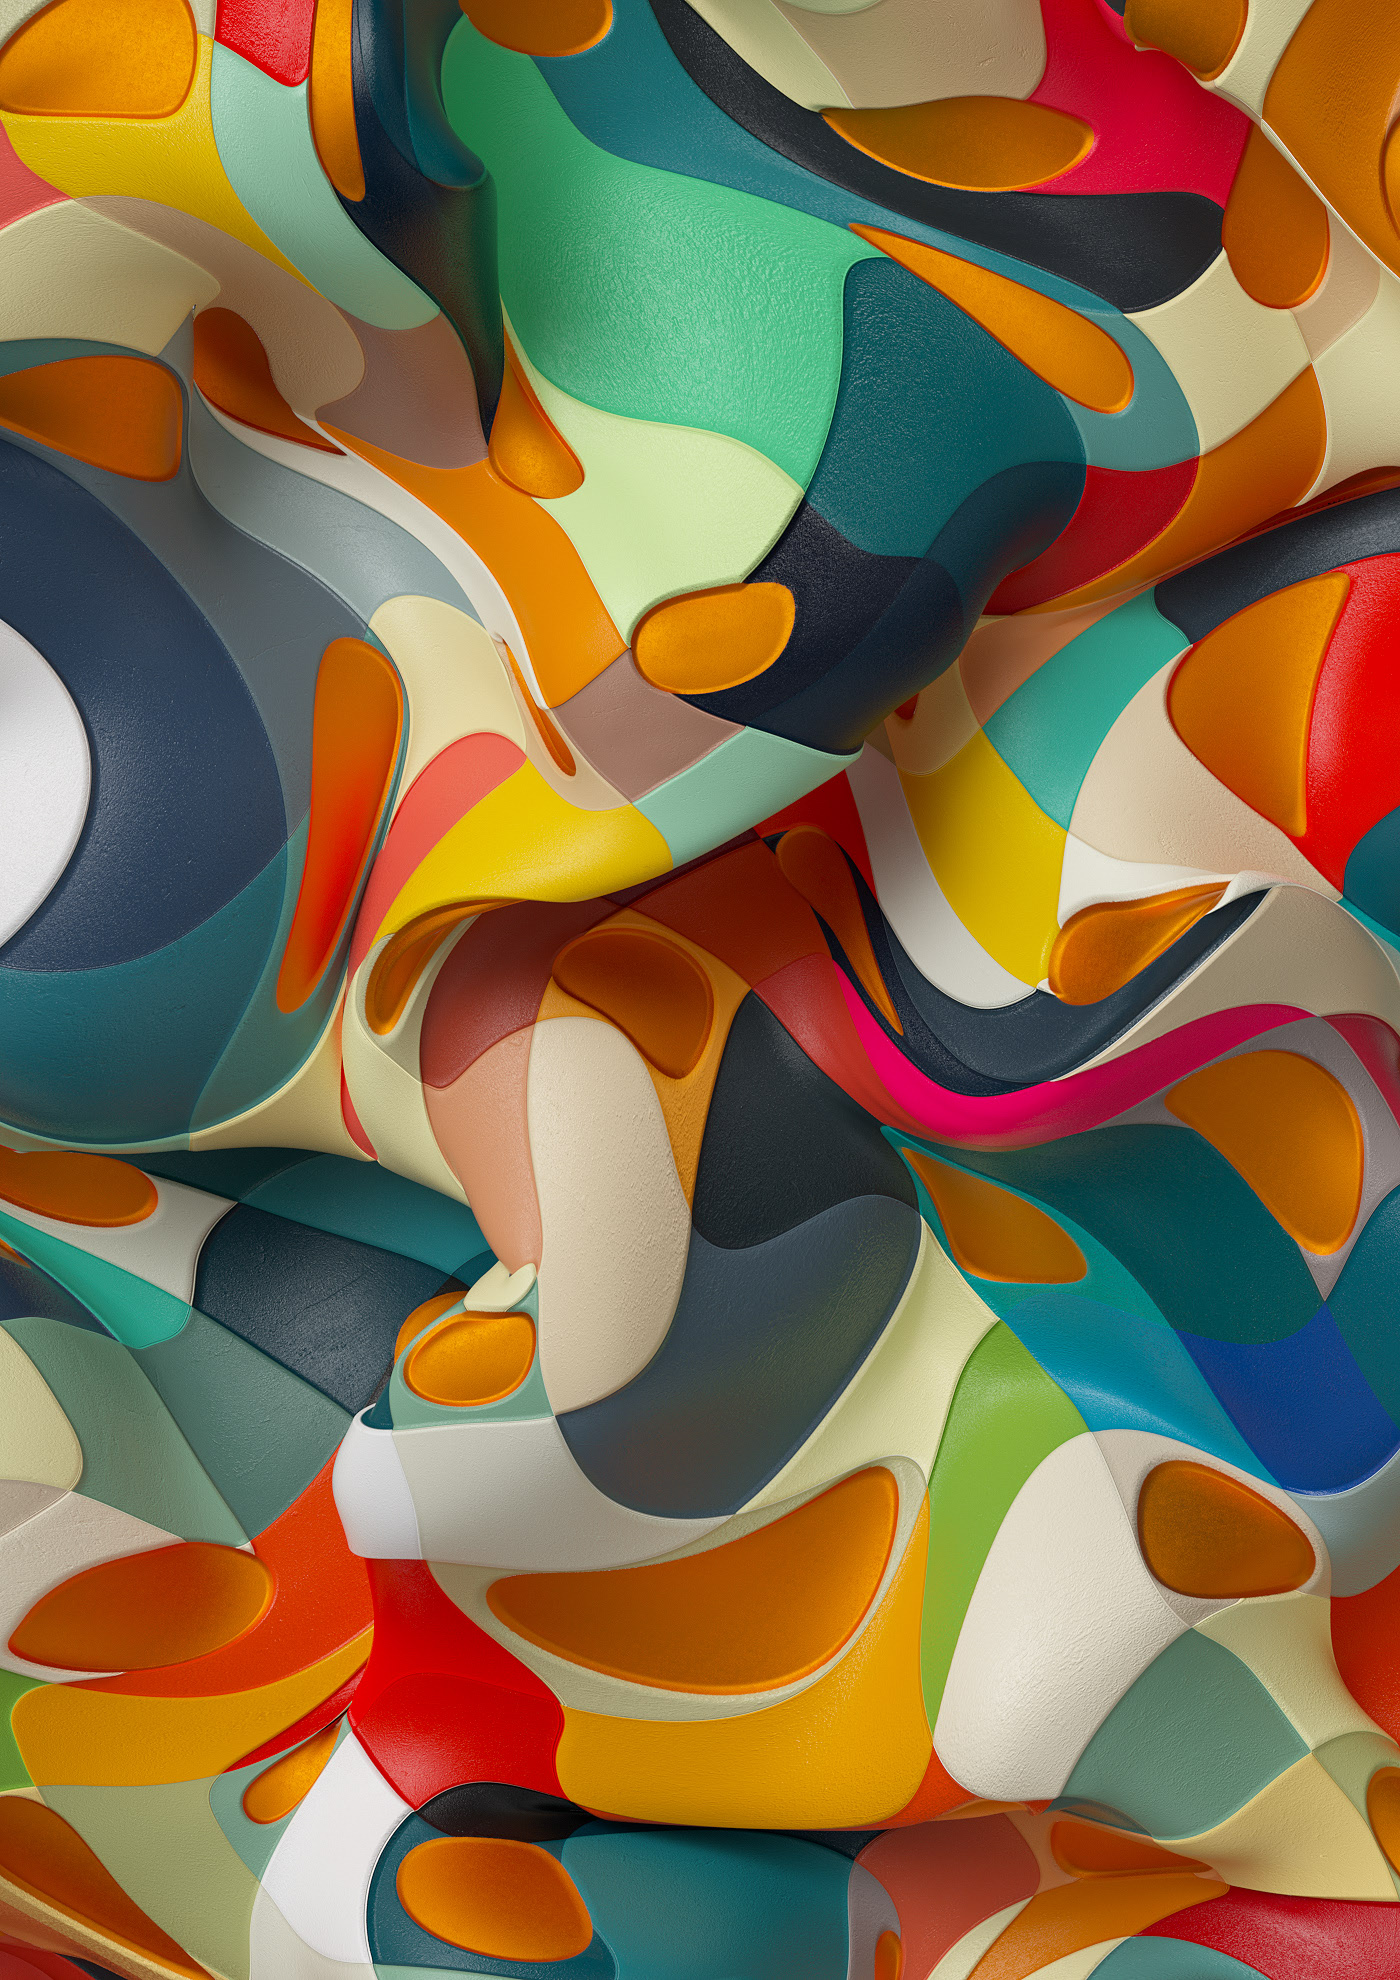 Traversing Patterns & Textures with Danny Ivan - Digital Art